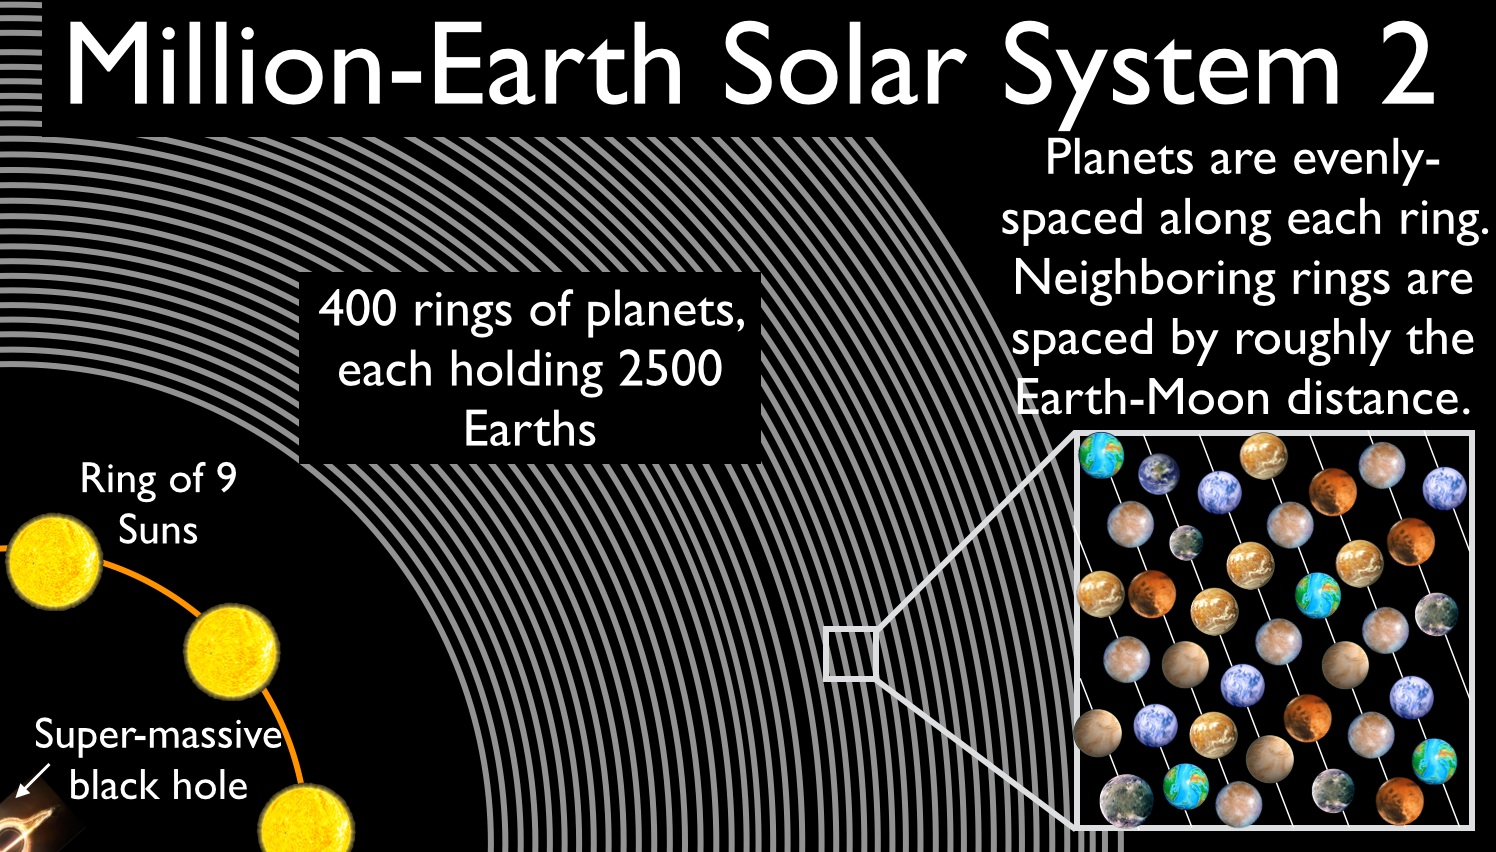 The Million Earth Solar System